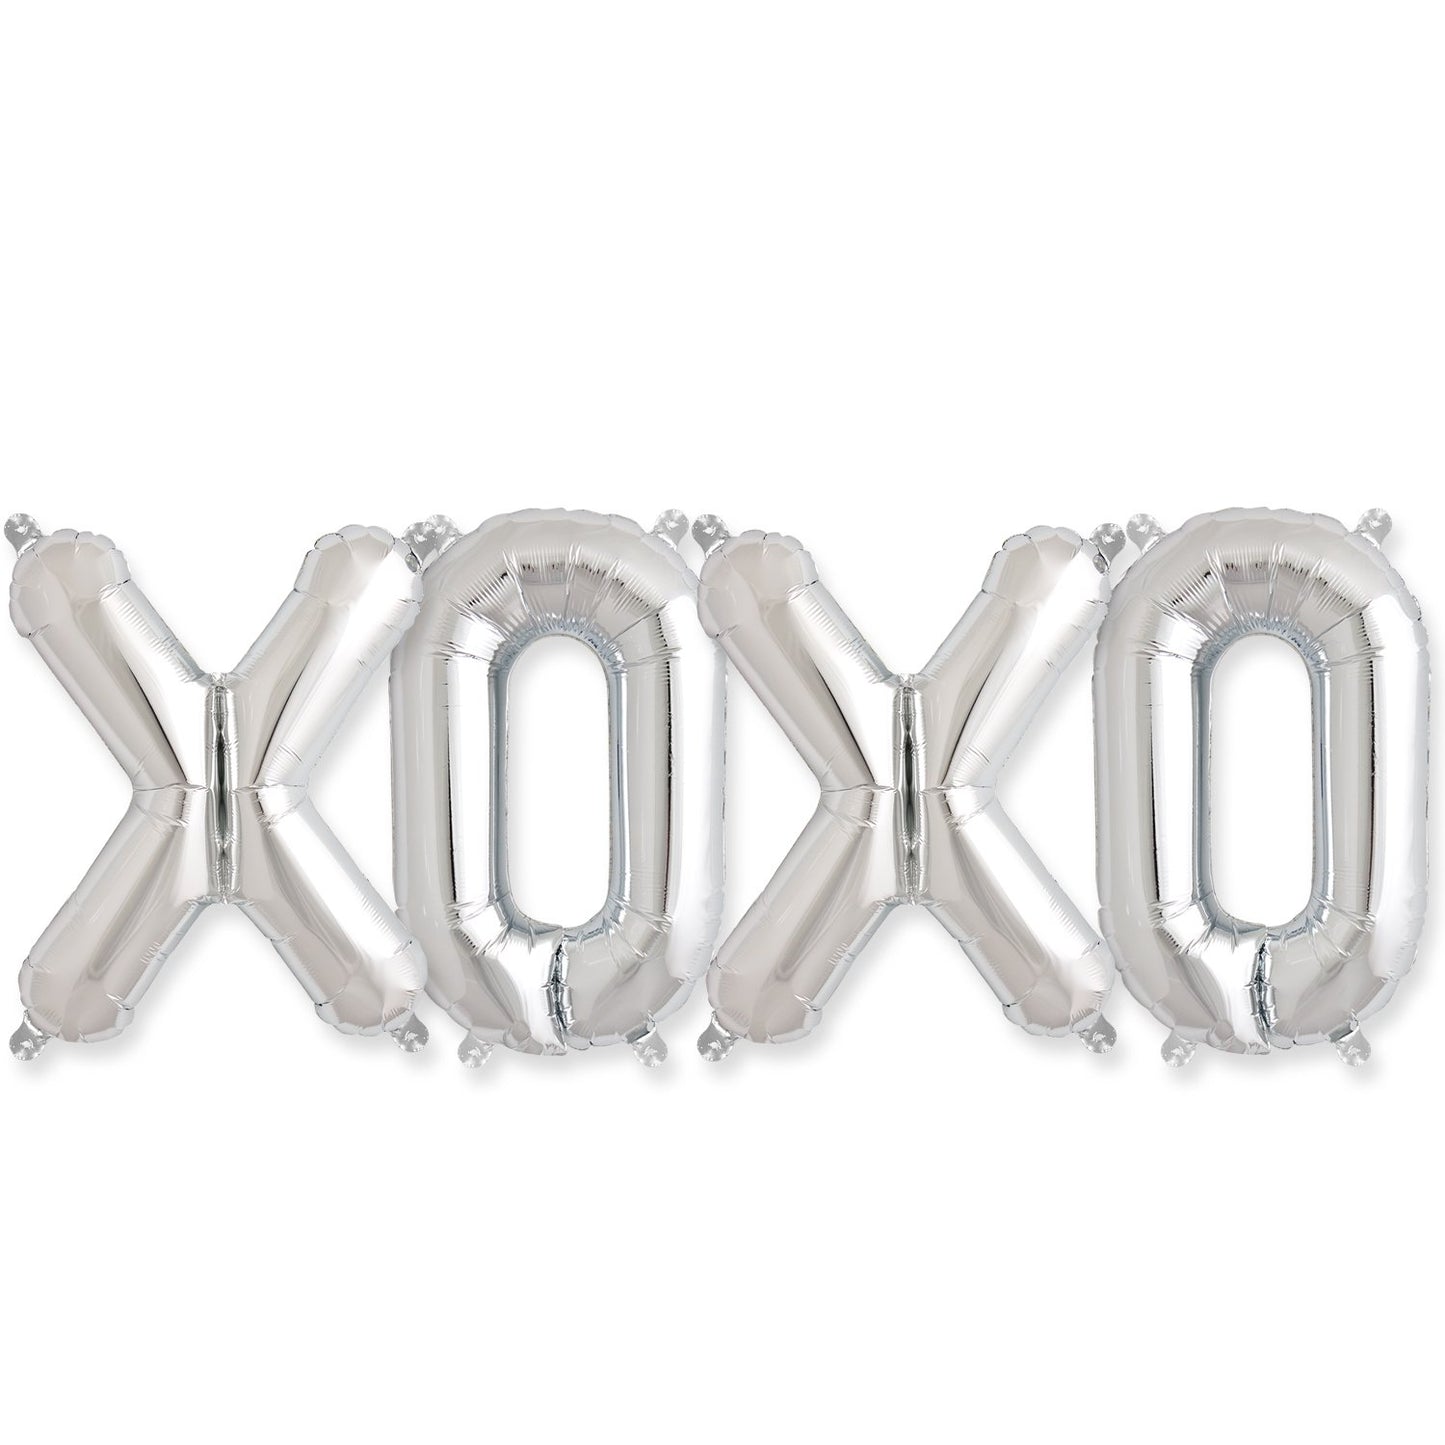 Letrero 16" XOXO plateado